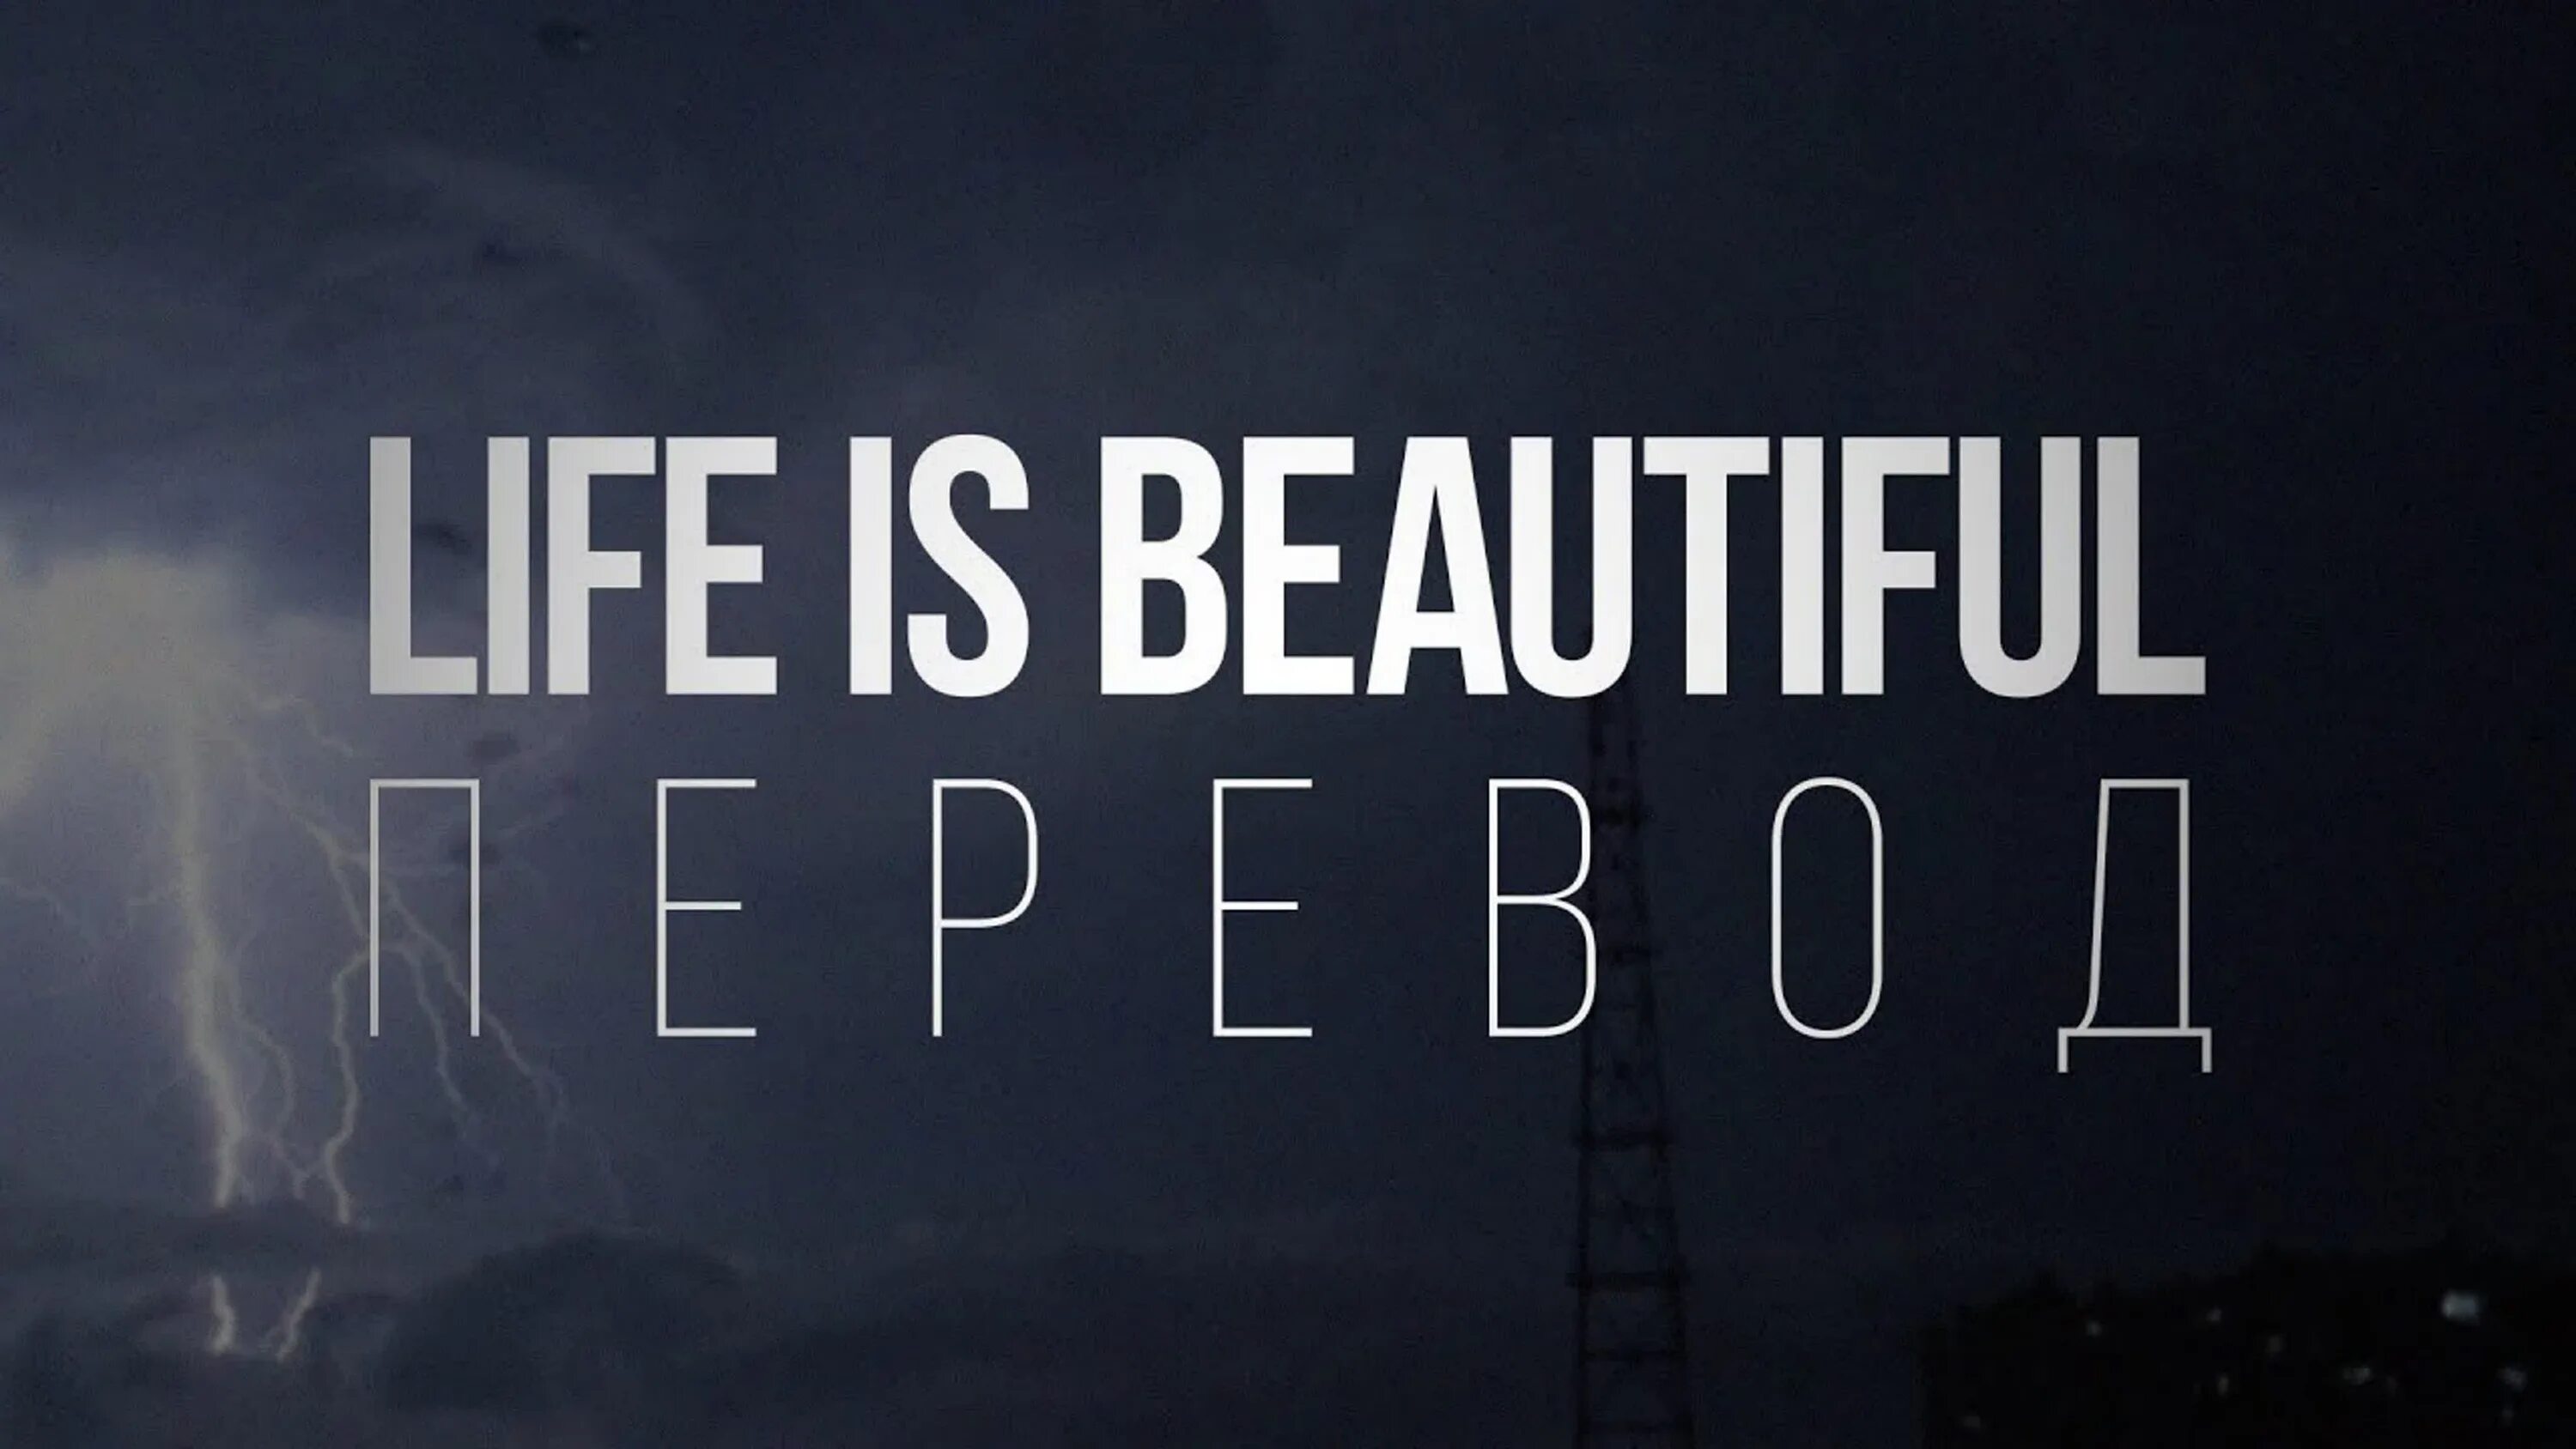 Life is beautiful перевод. Lil Peep Life. Лил пип лайф ИС бьютифул. Надпись Life is beautiful Lil Peep.